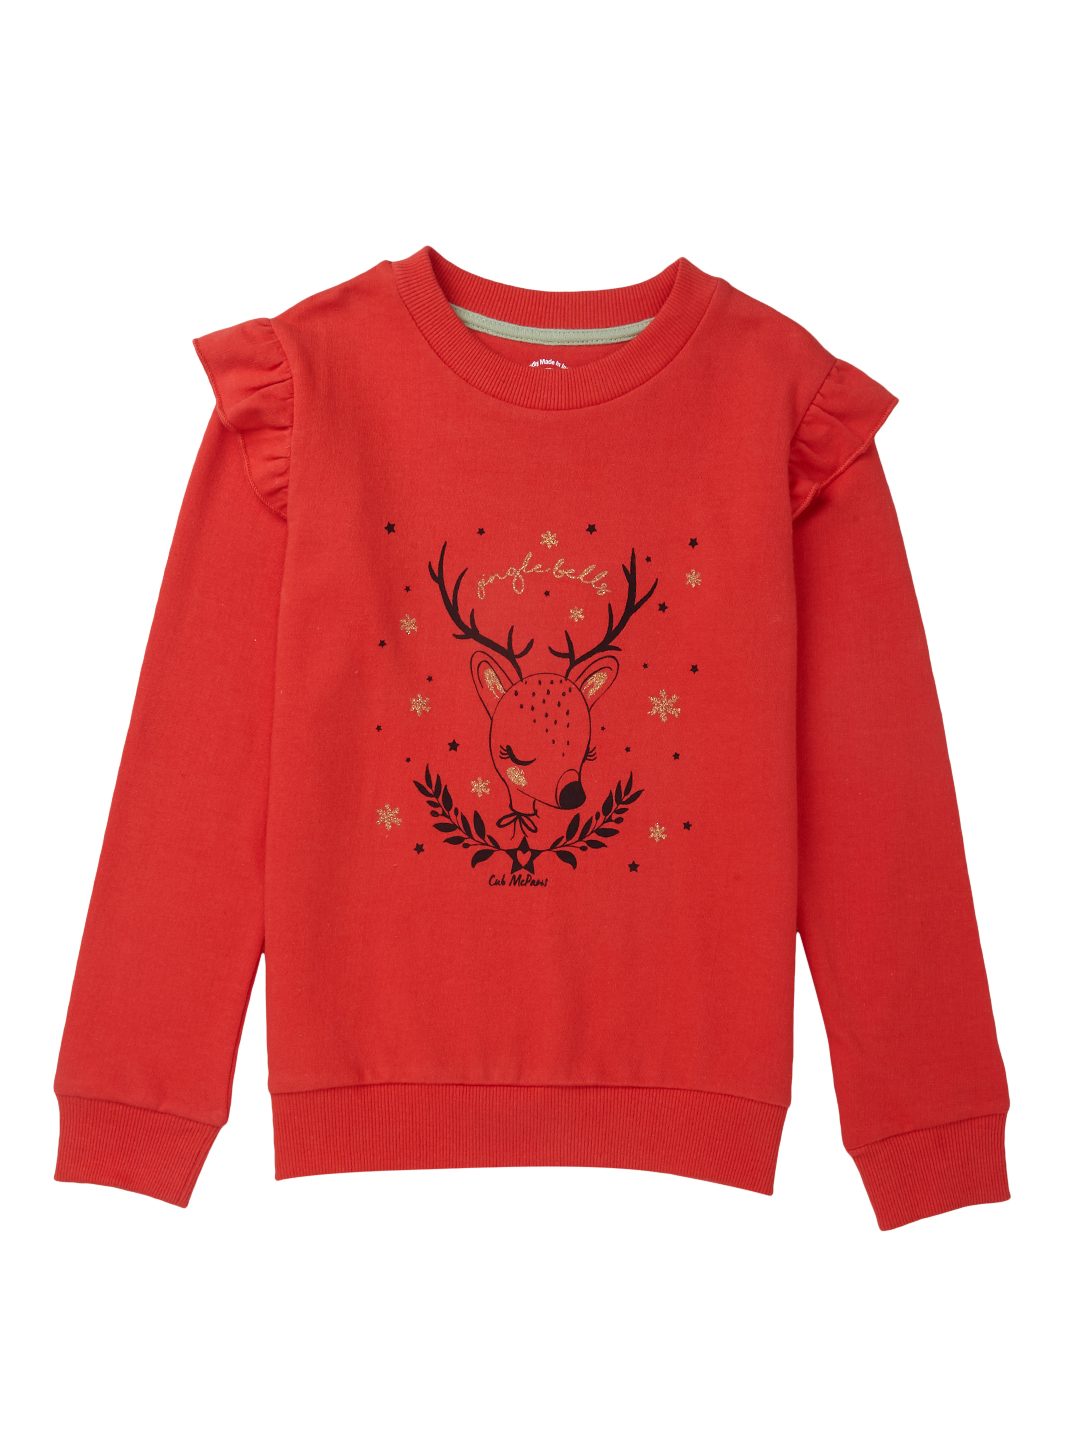 Buy Red Sweatshirt for Girls Online from Cub McPaw